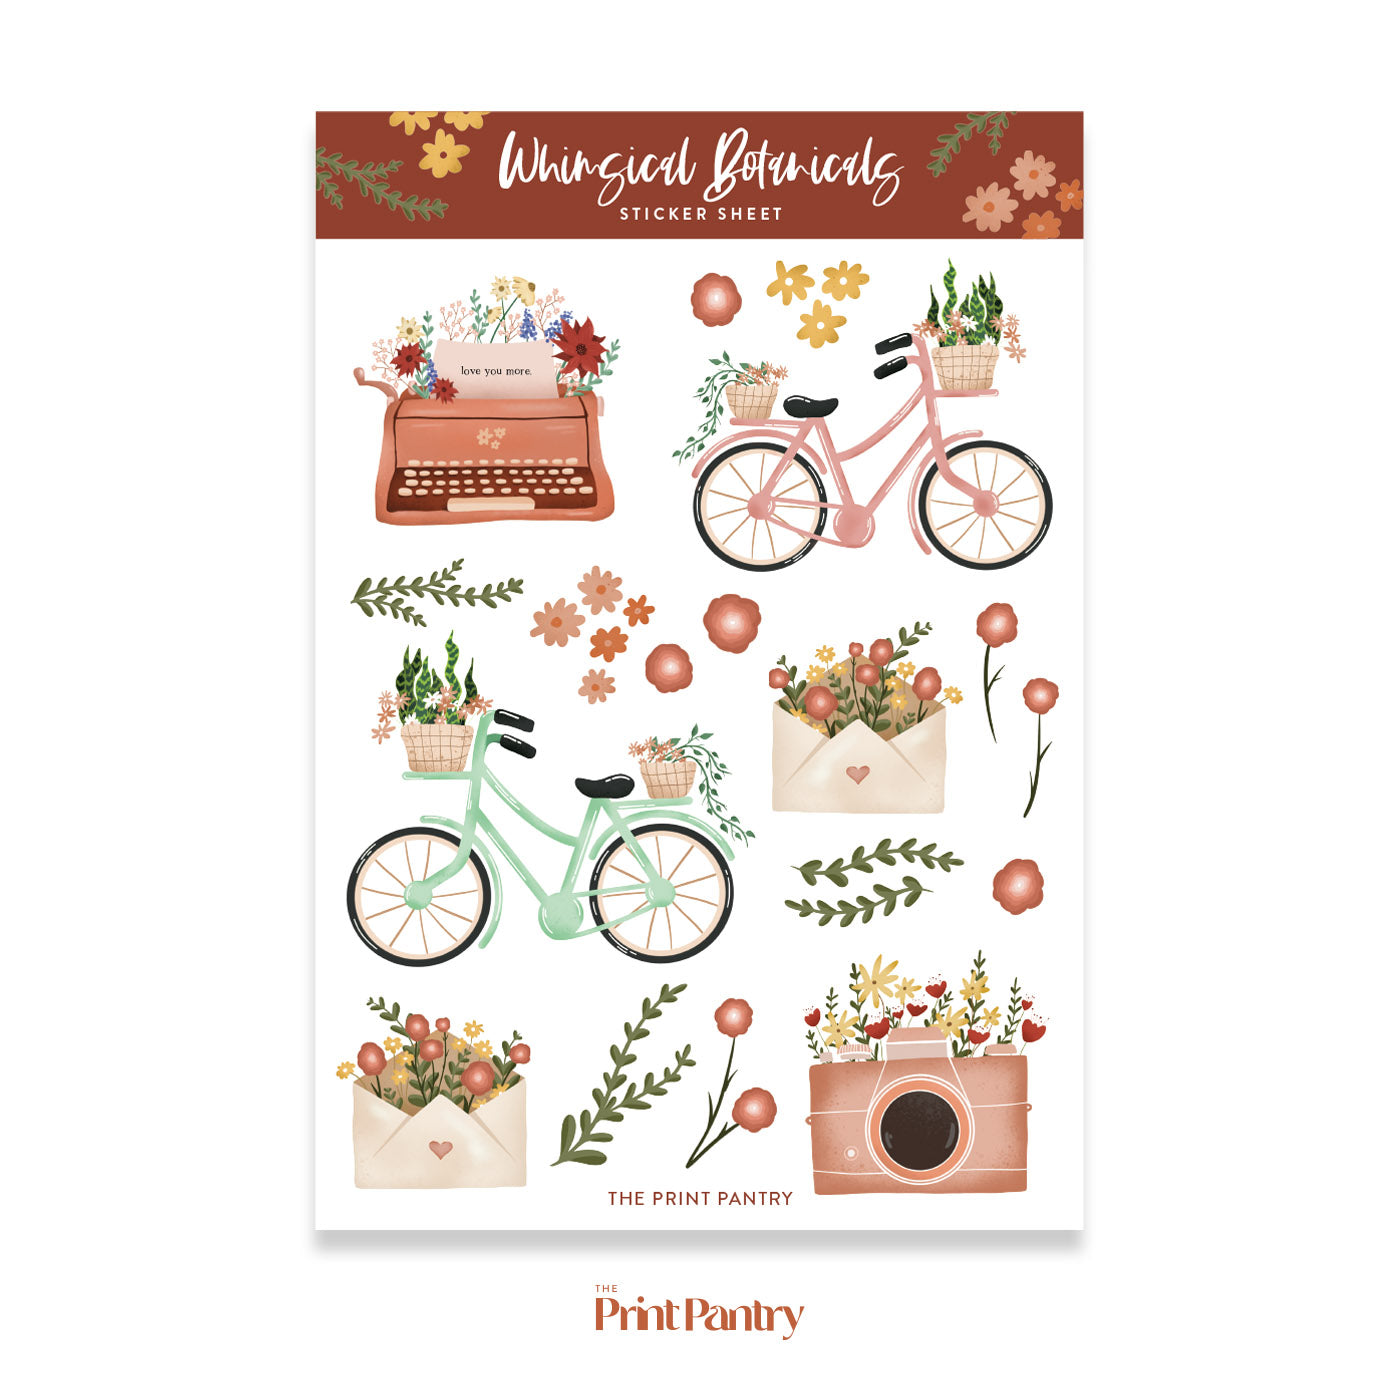 Whimsical Botanicals Sticker Sheet